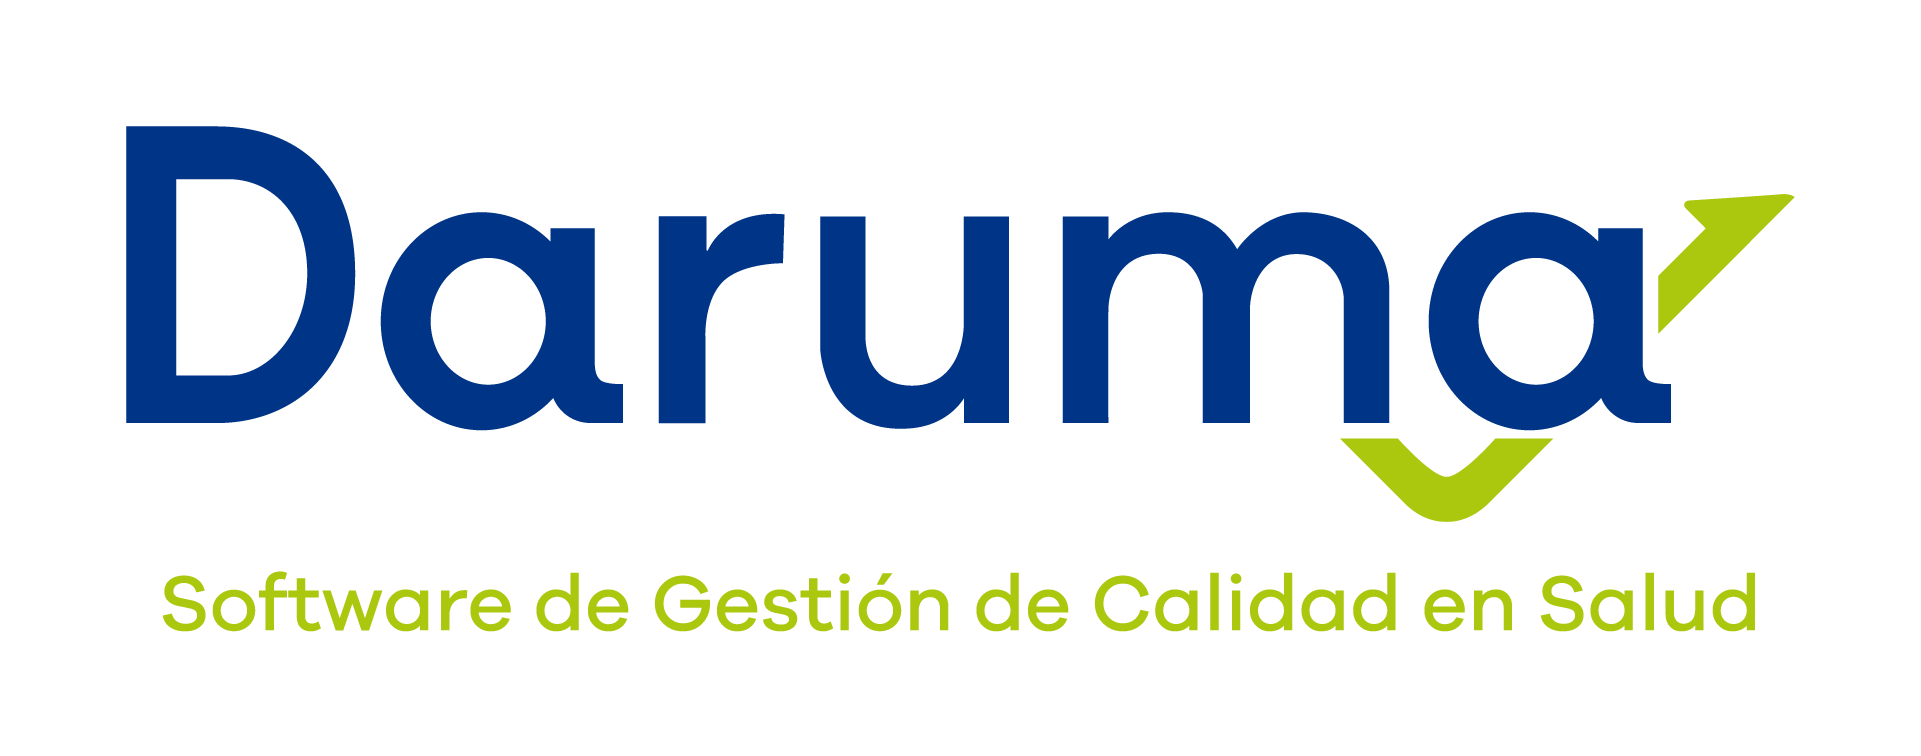 Daruma_Gestion_calidad_Salud